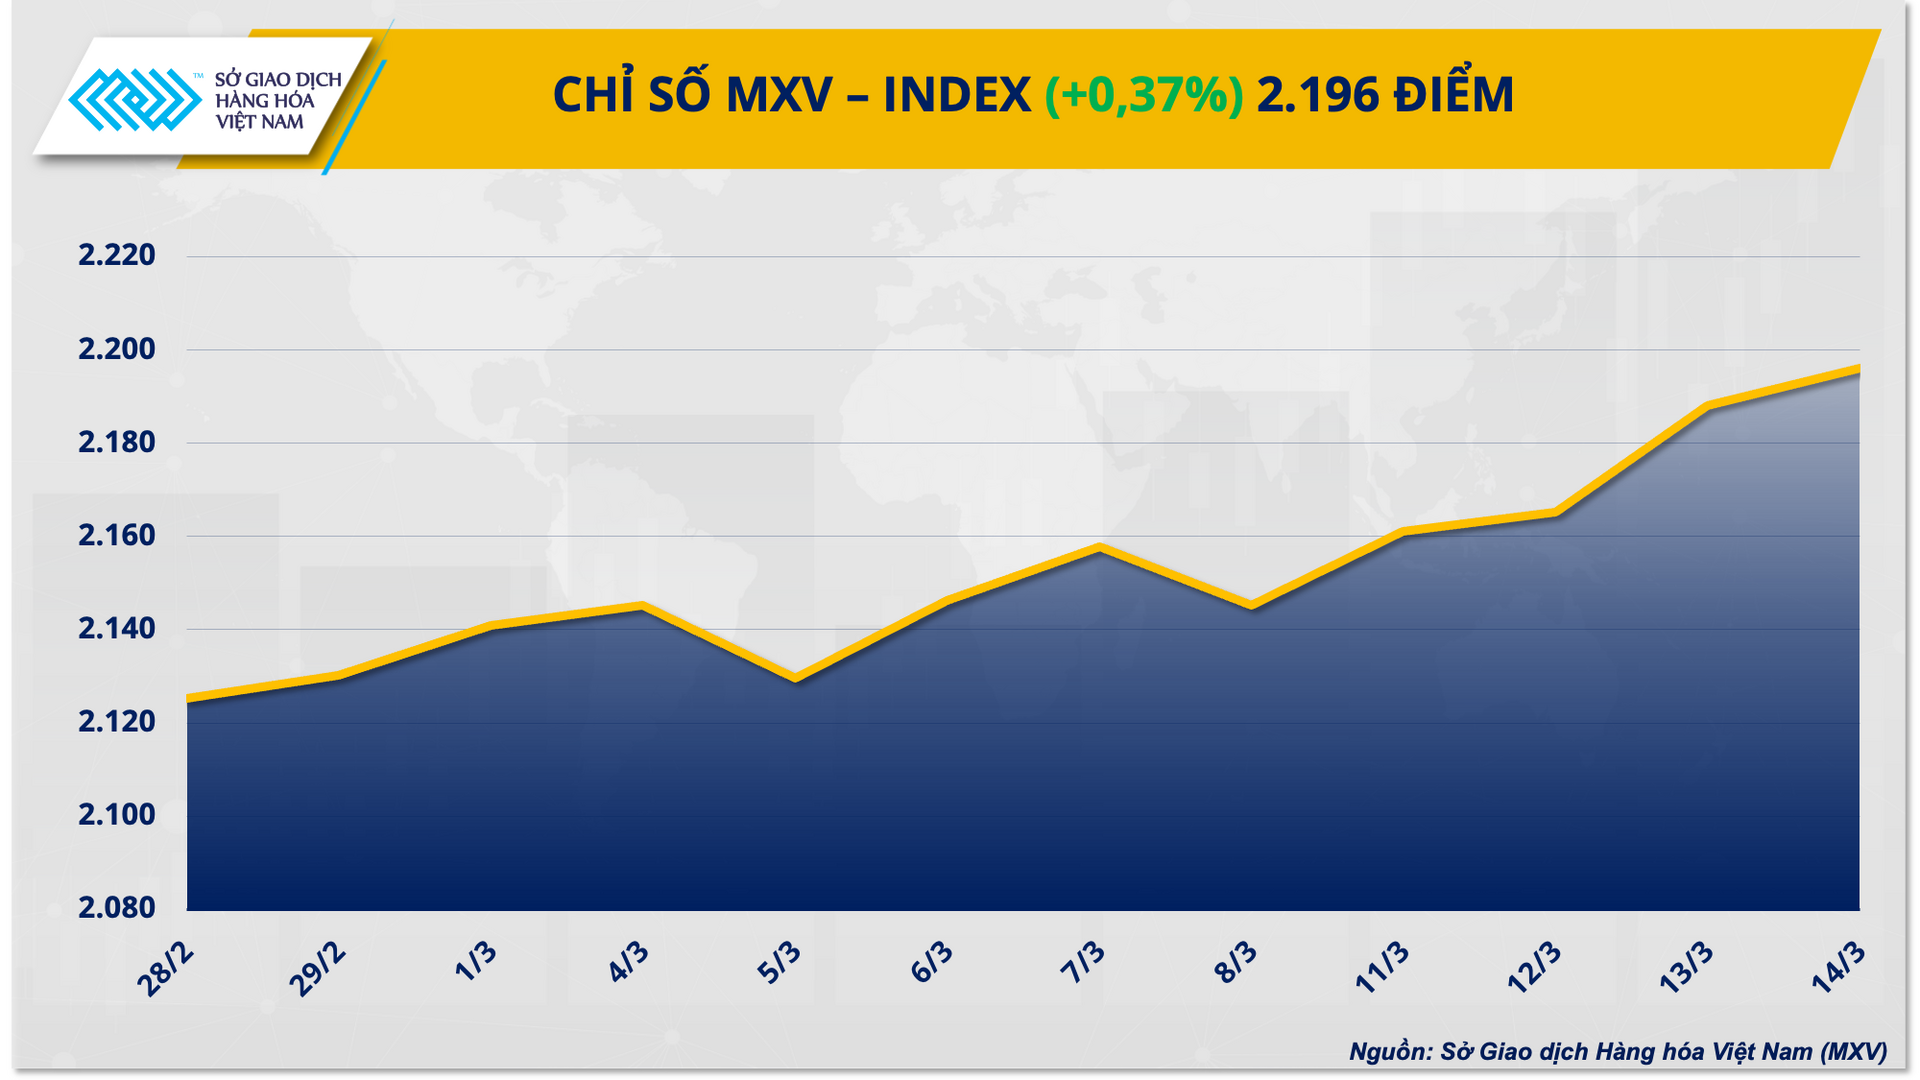 1. mxv - index